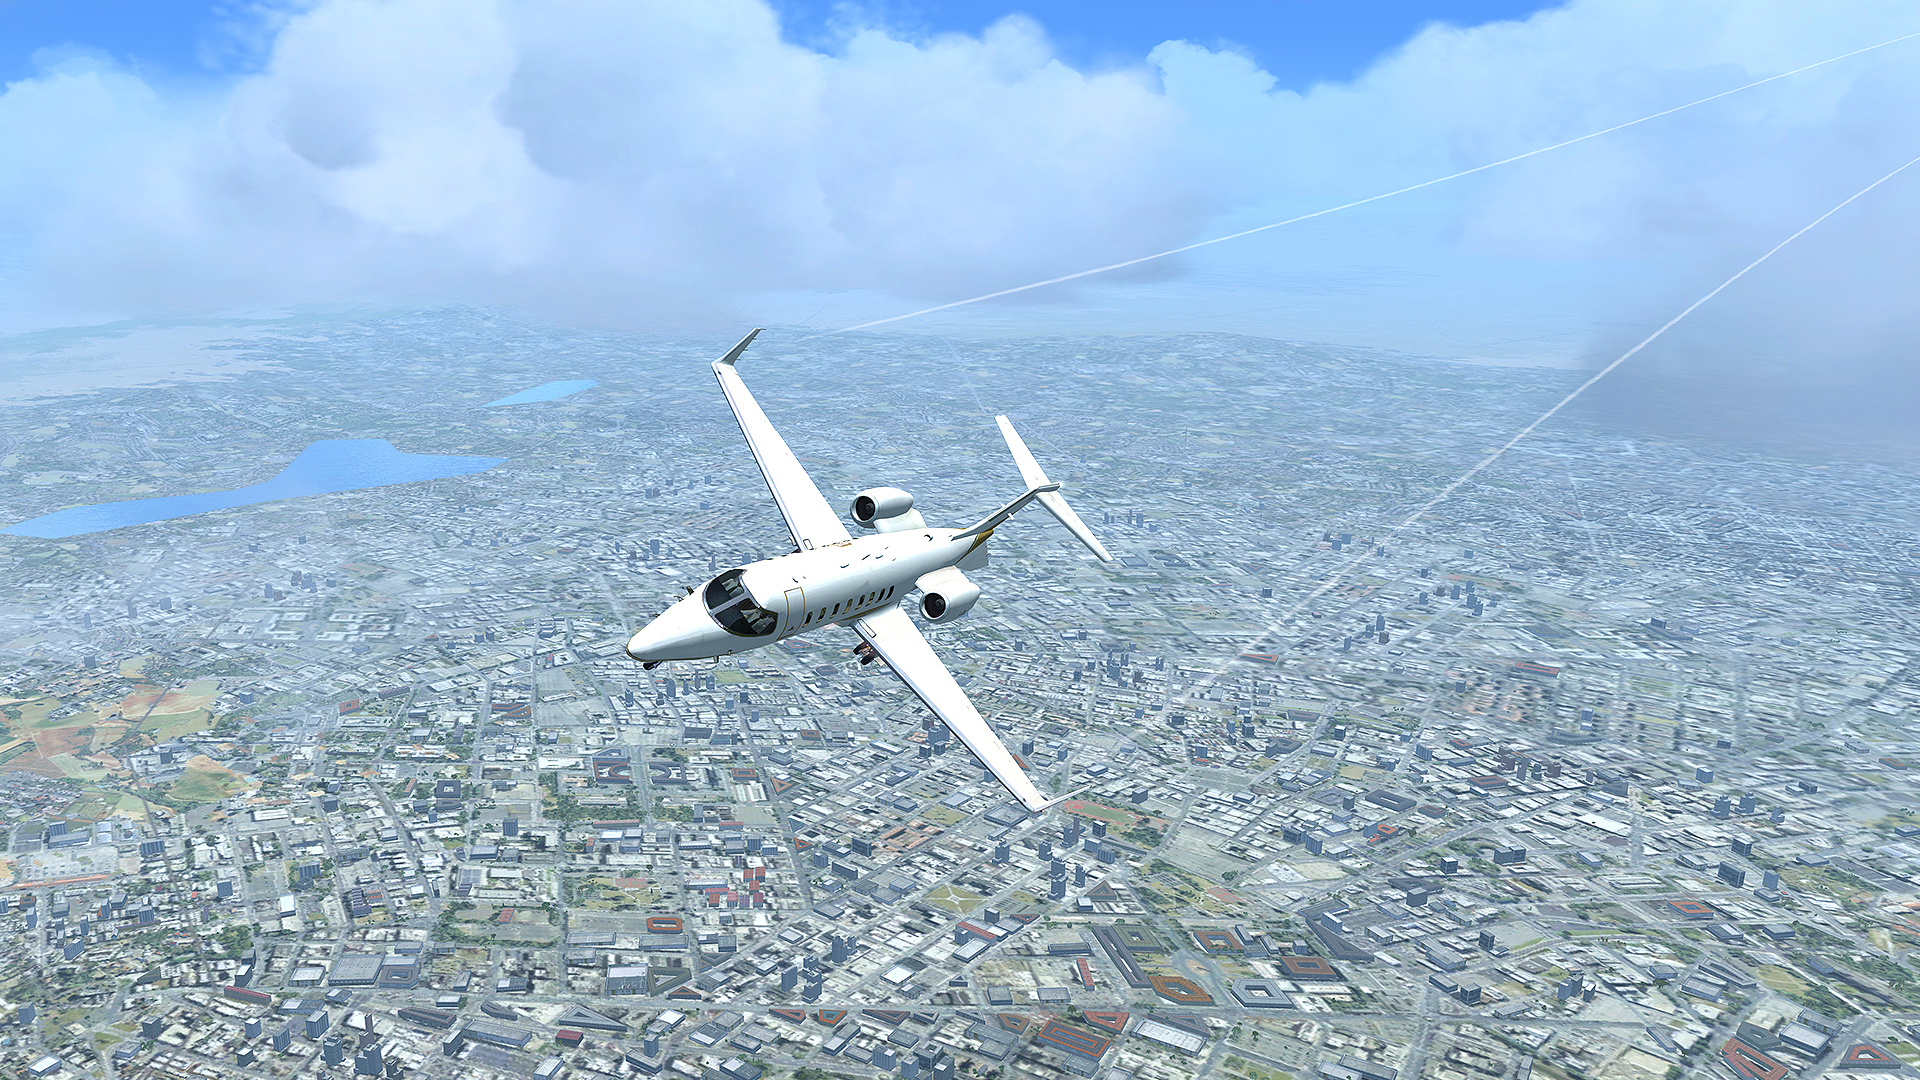 Microsoft Flight Simulator X: Steam Edition Free Download